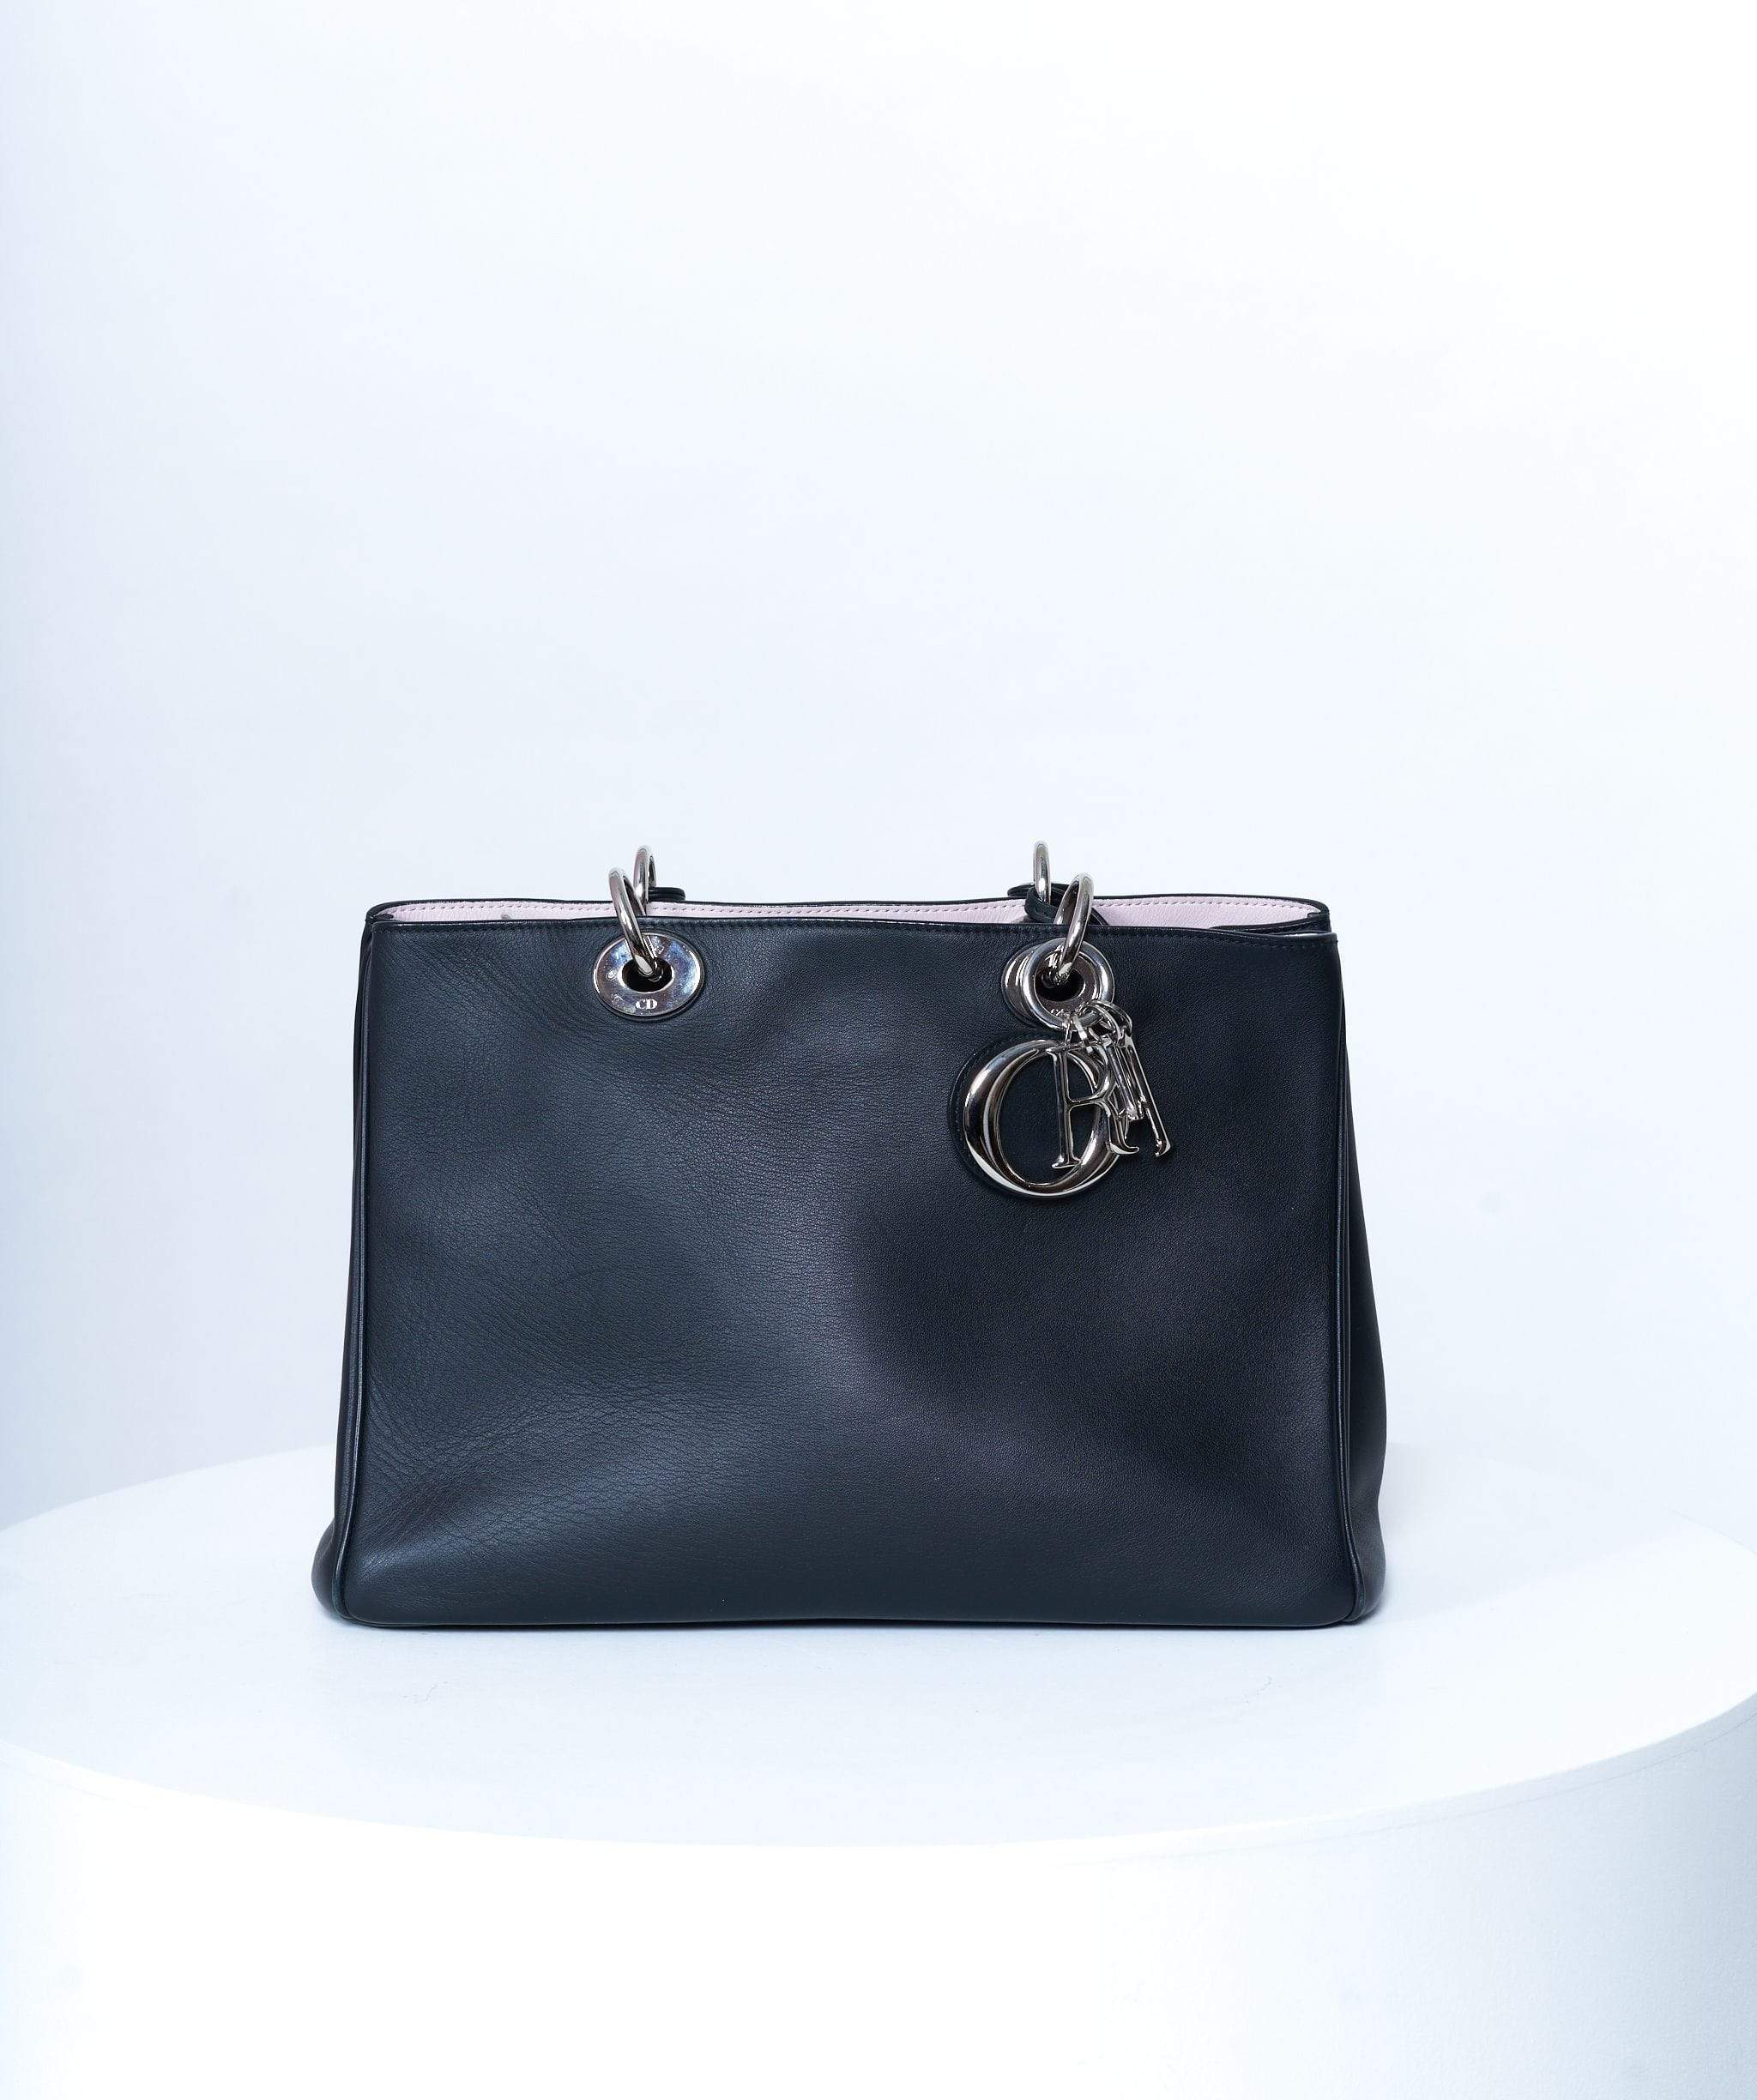 Christian Dior Dior Diorissimo Black Leather Bag PHW